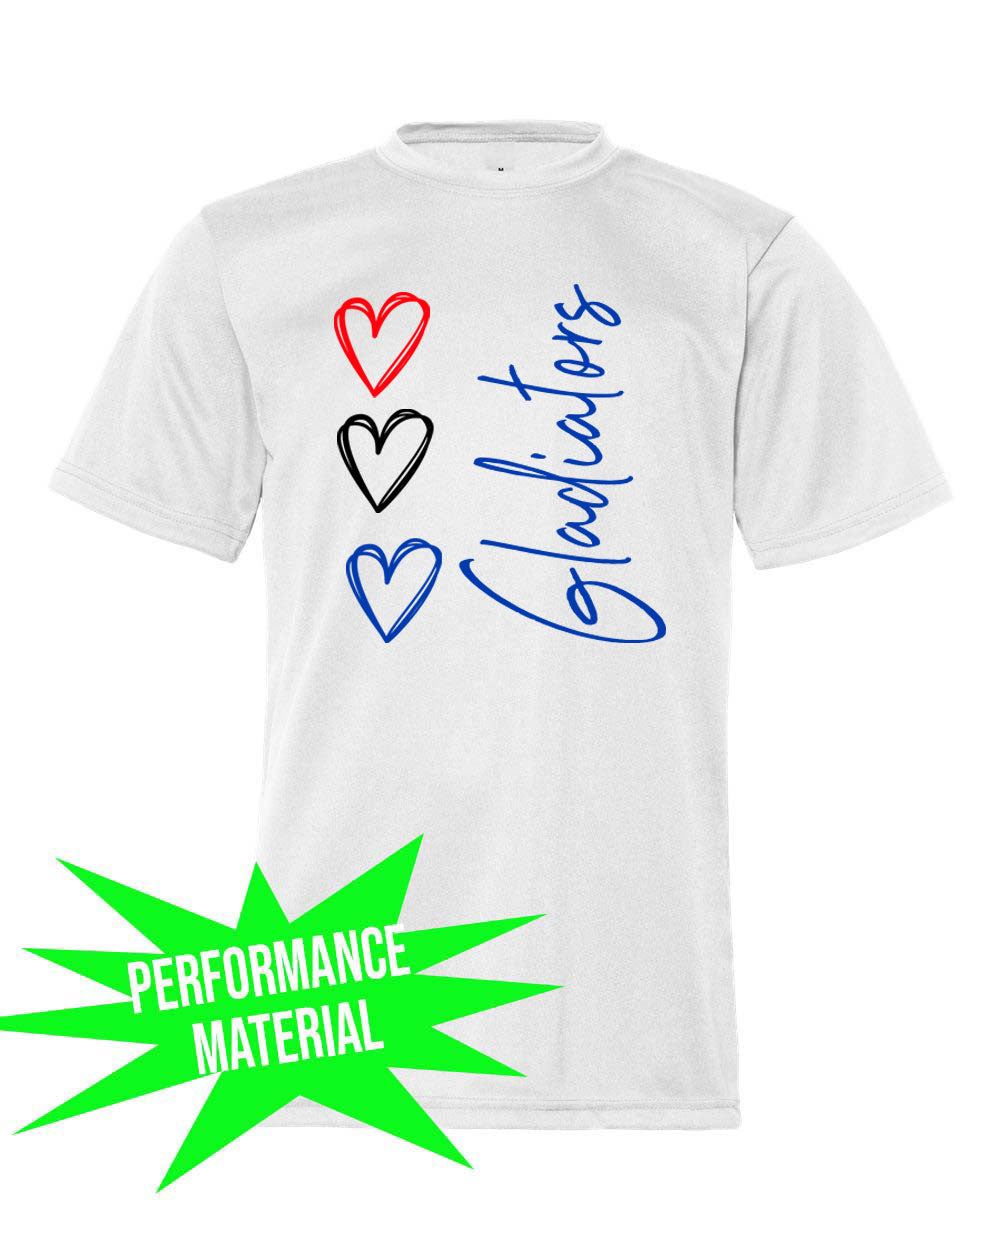 Goshen School Performance Material T-Shirt Design 4